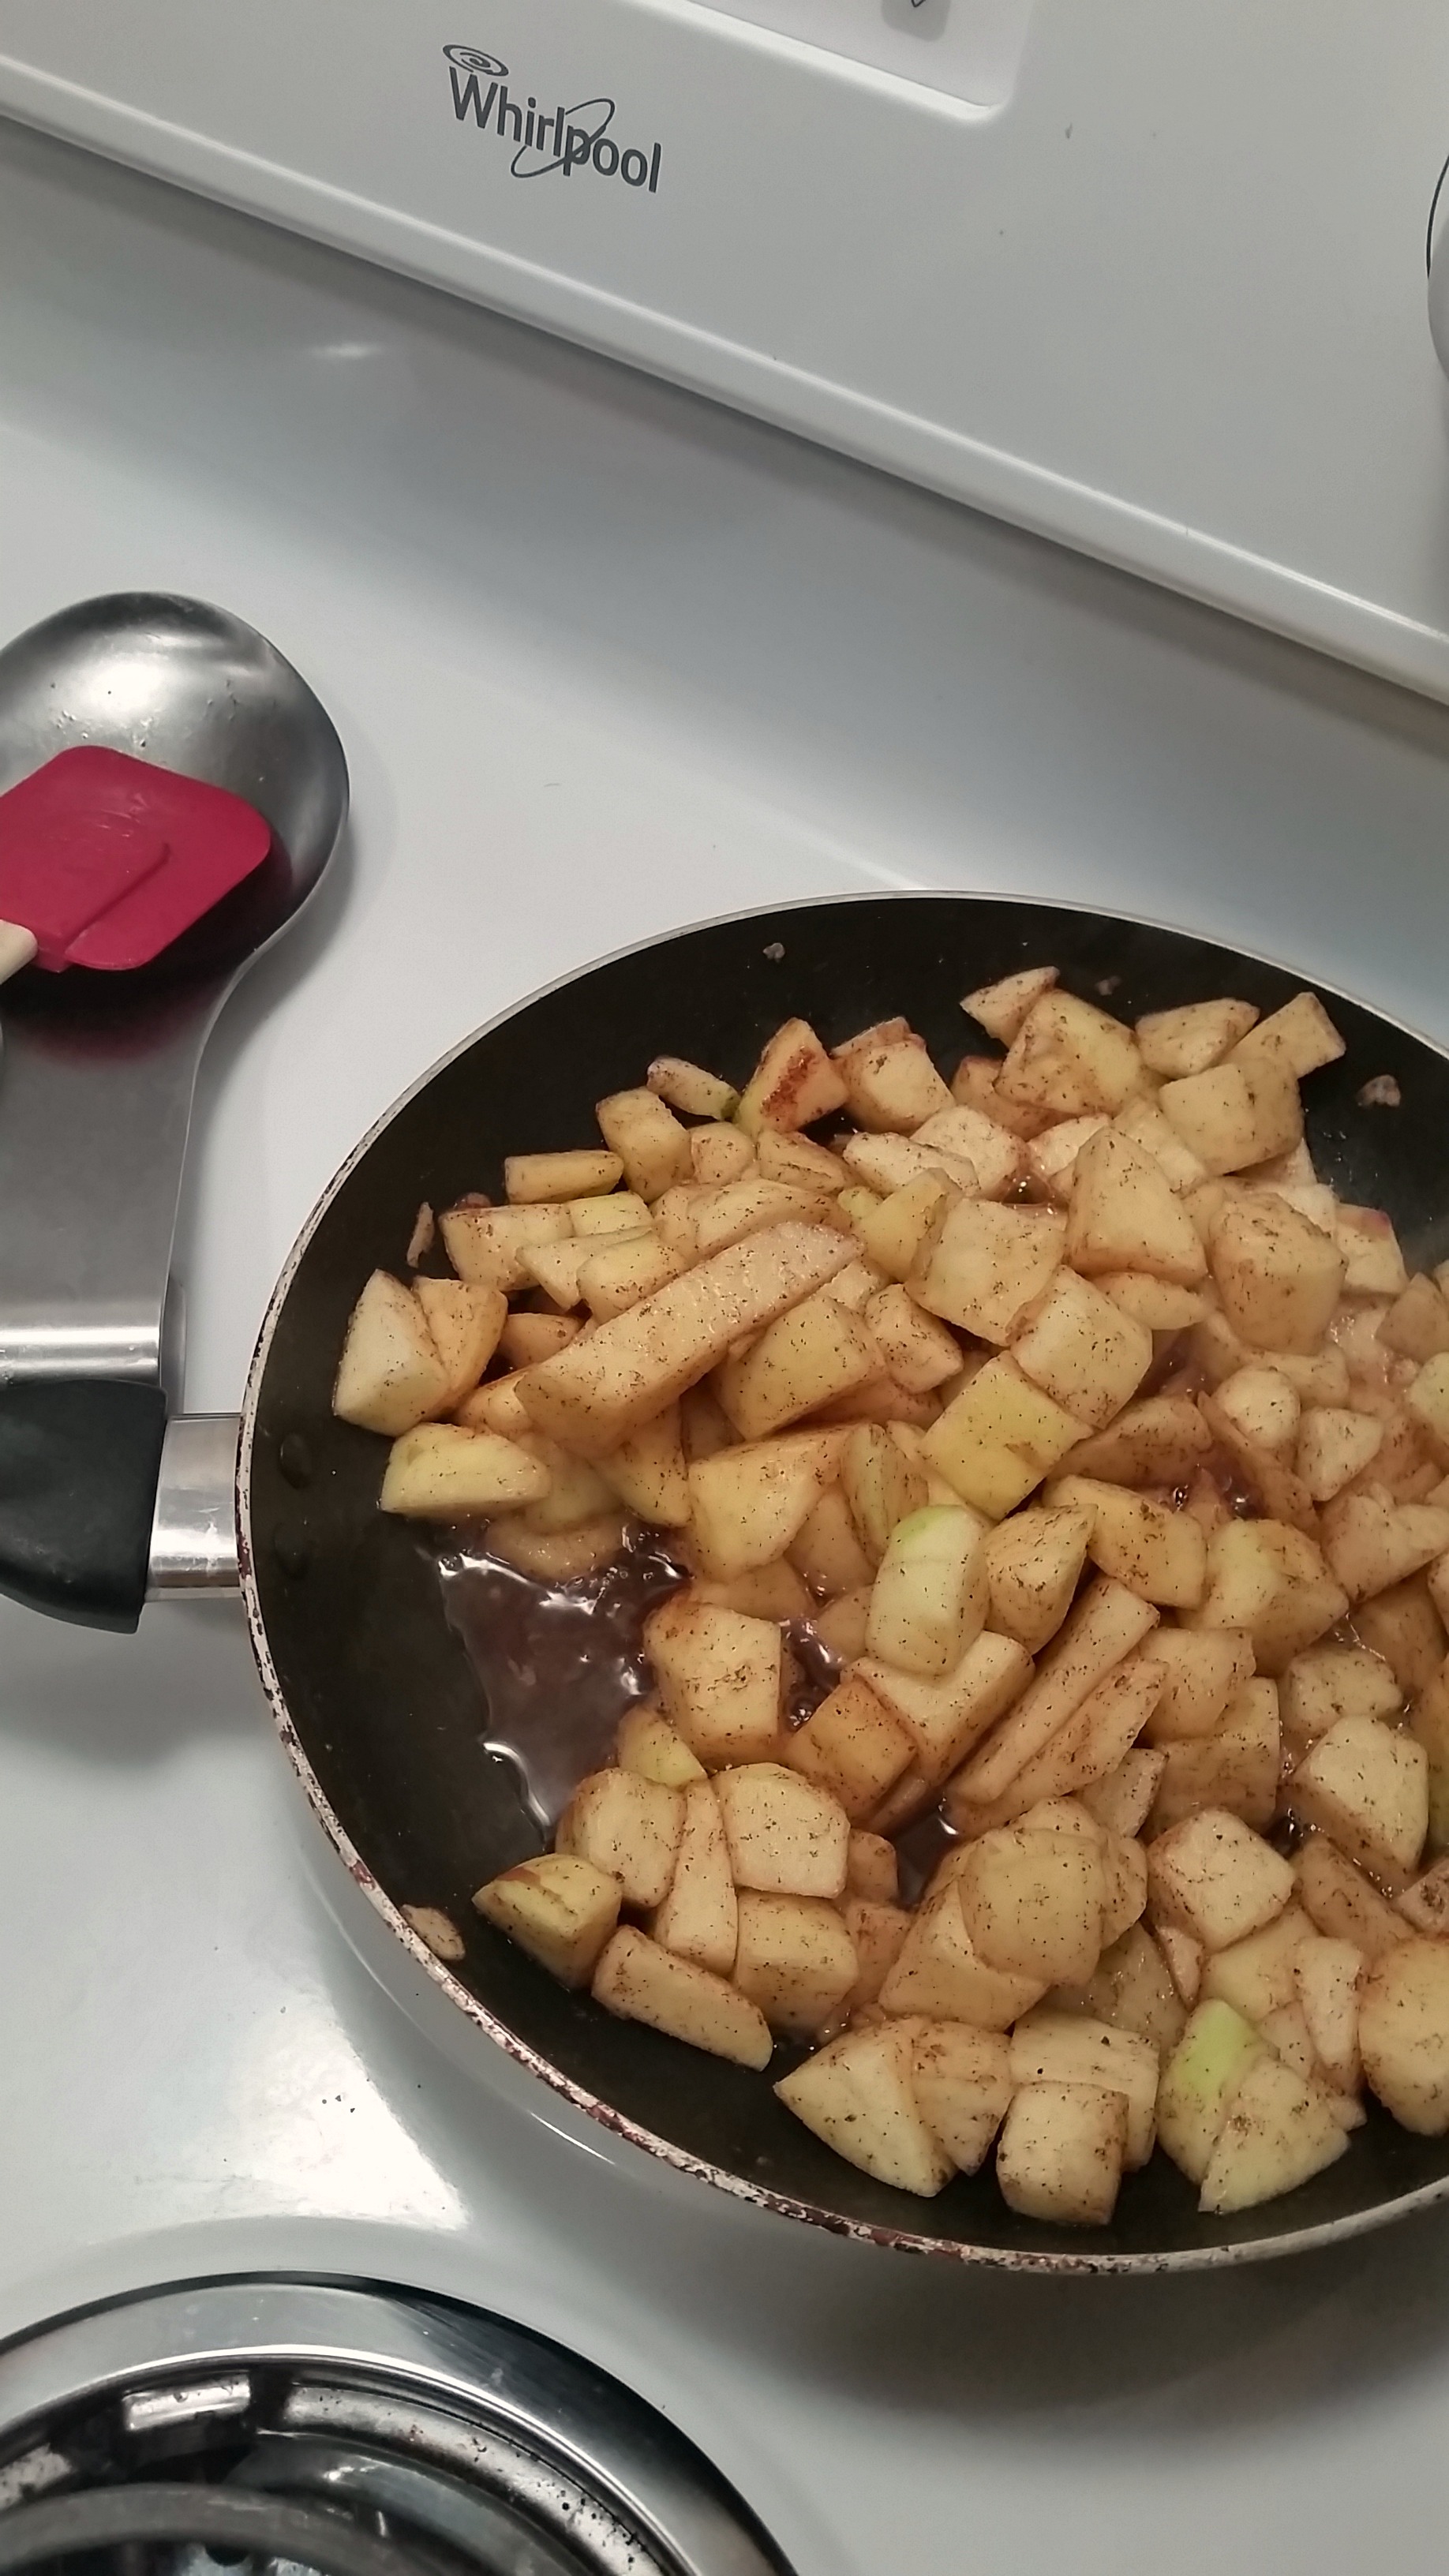 Skinny(ish) Apple Pie Recipe with Cinnamon Roll Crust - Meredith Rines